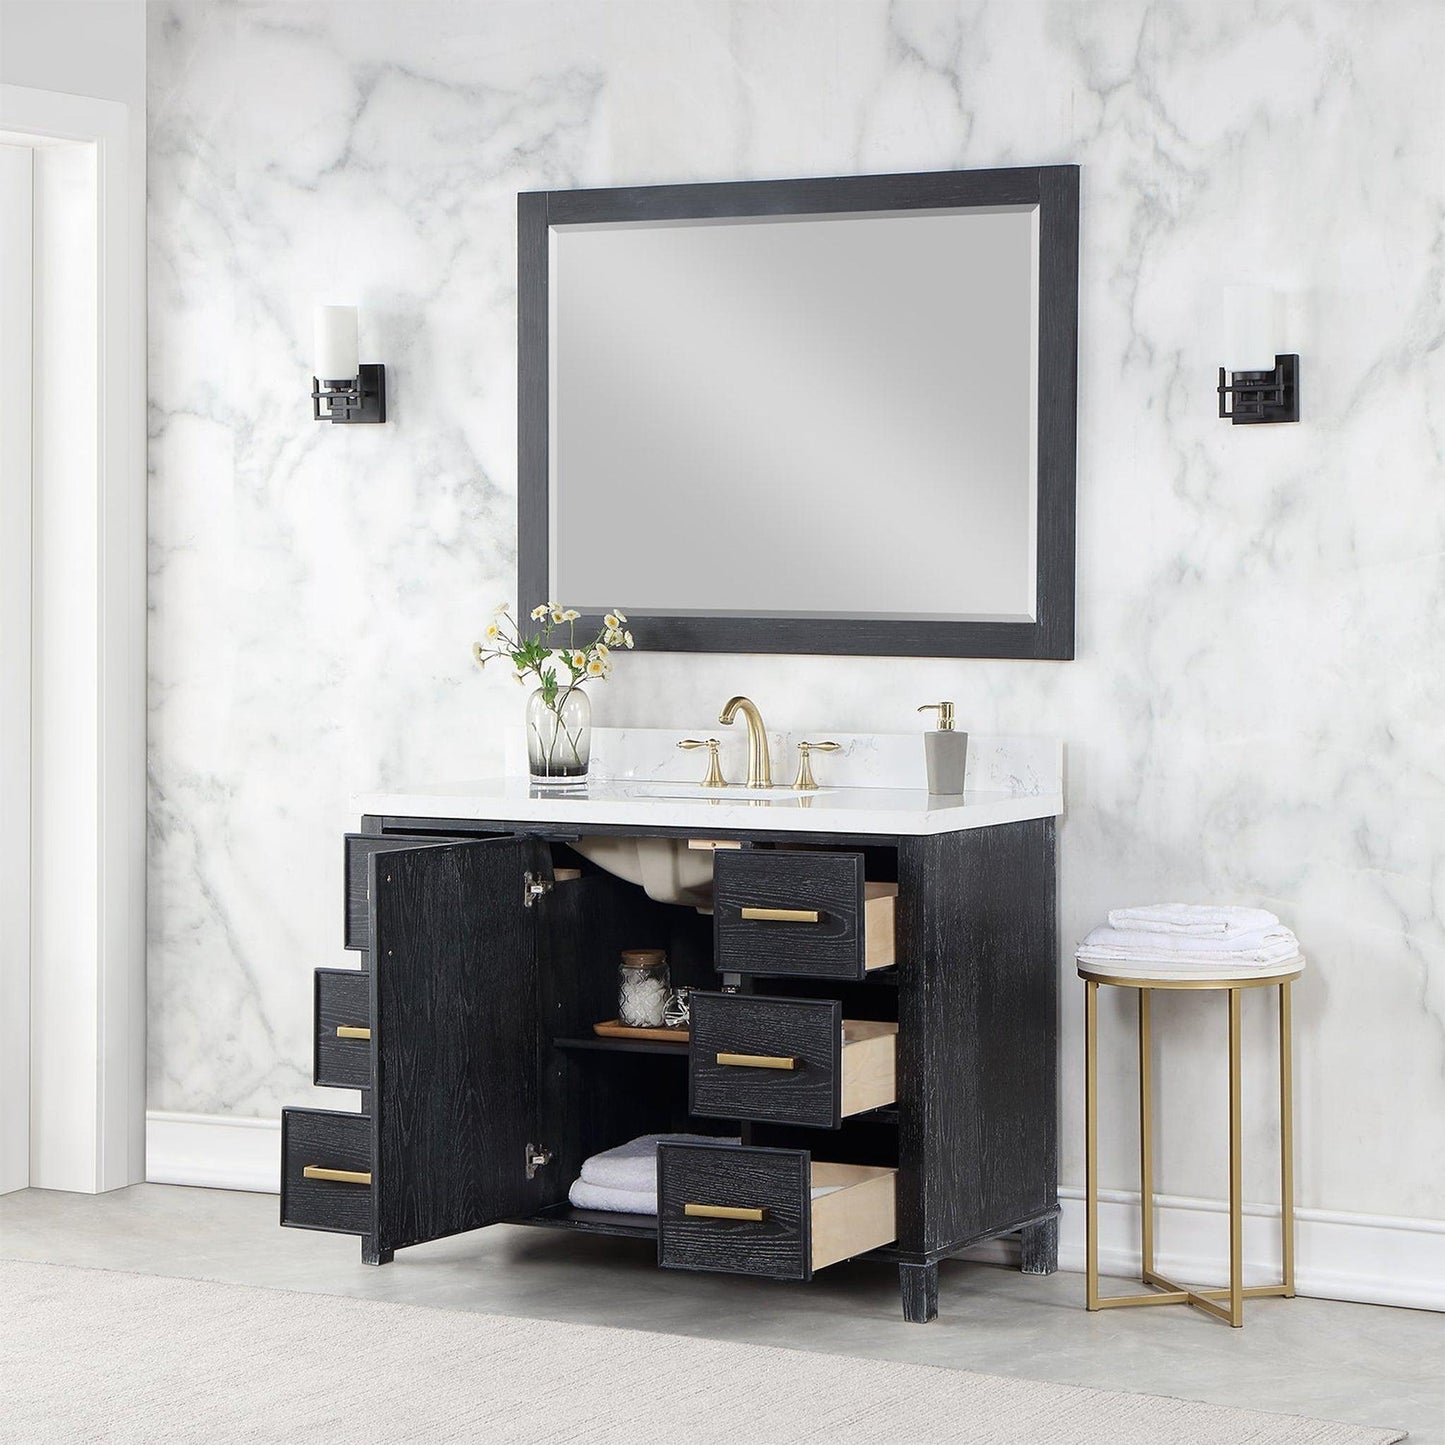 Altair Weiser 48" Black Oak Freestanding Single Bathroom Vanity Set With Mirror, Aosta White Composite Stone Top, Single Rectangular Undermount Ceramic Sink, Overflow, and Backsplash